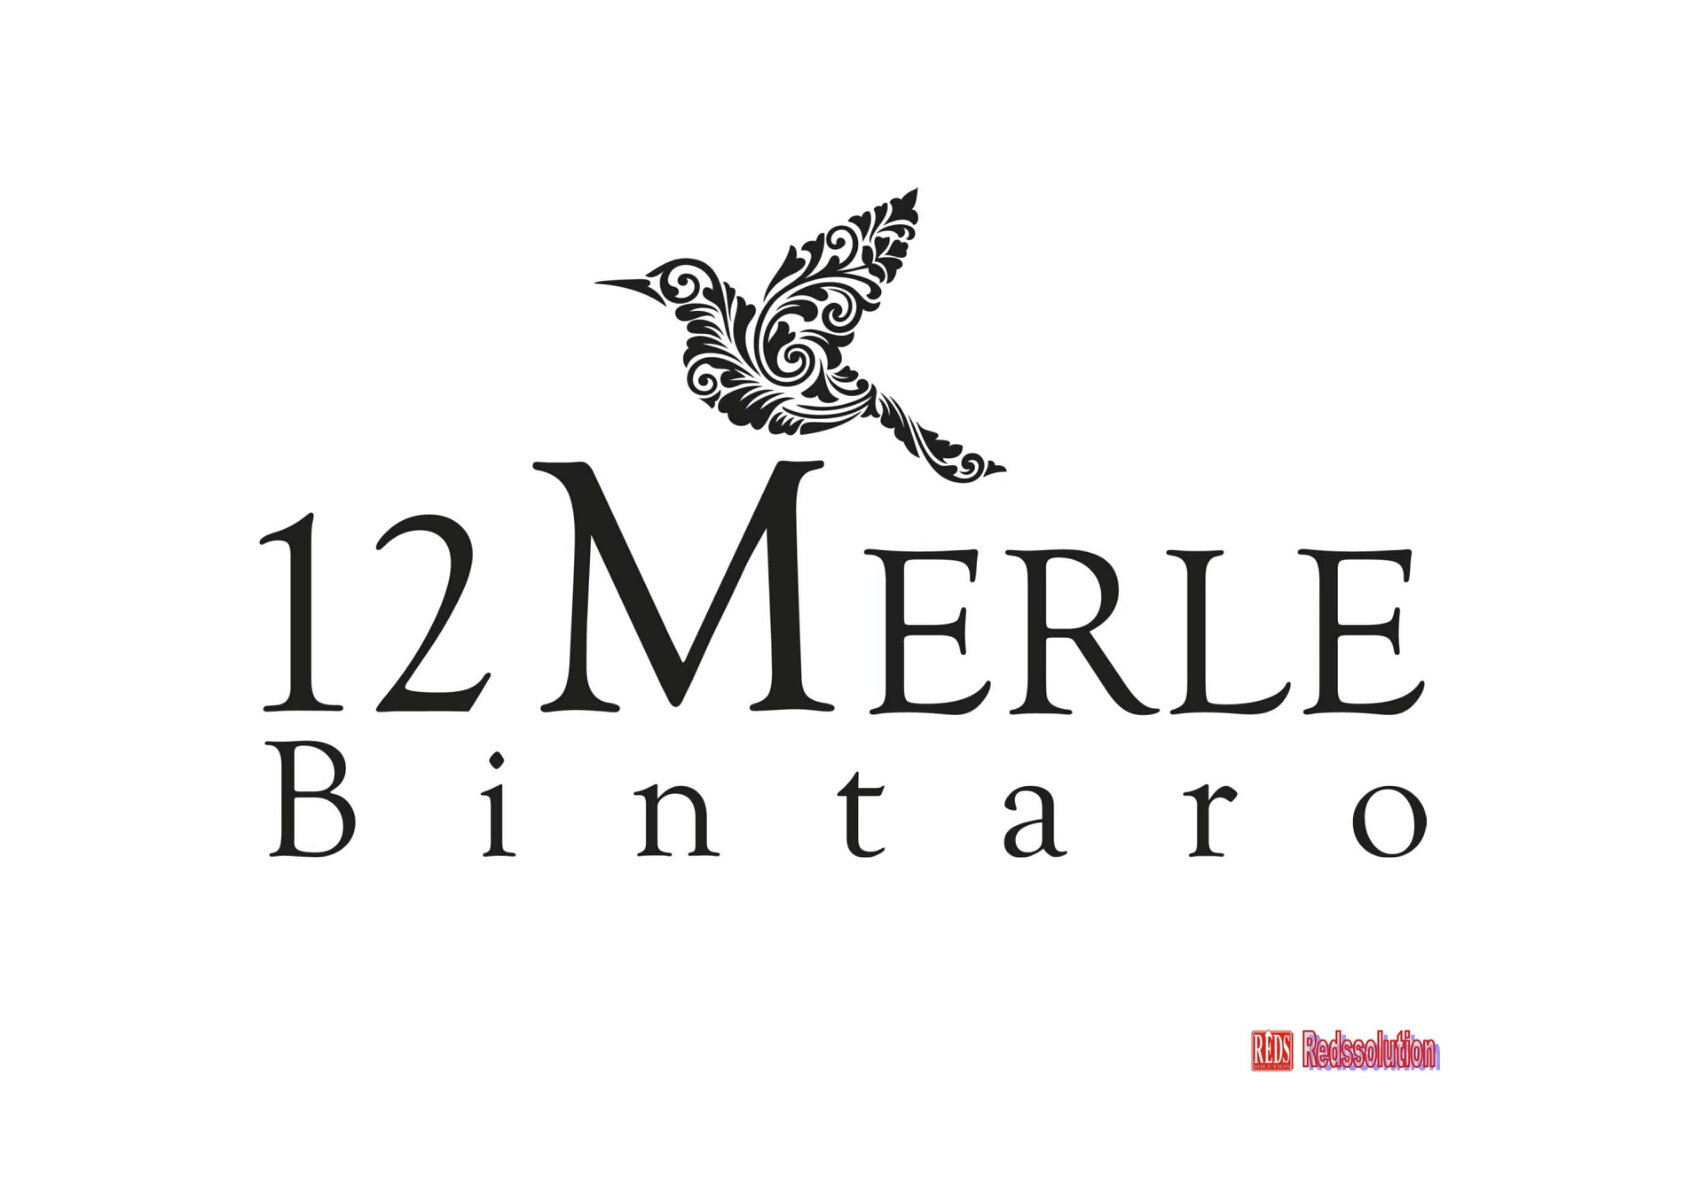 12 MERLE BINTARO